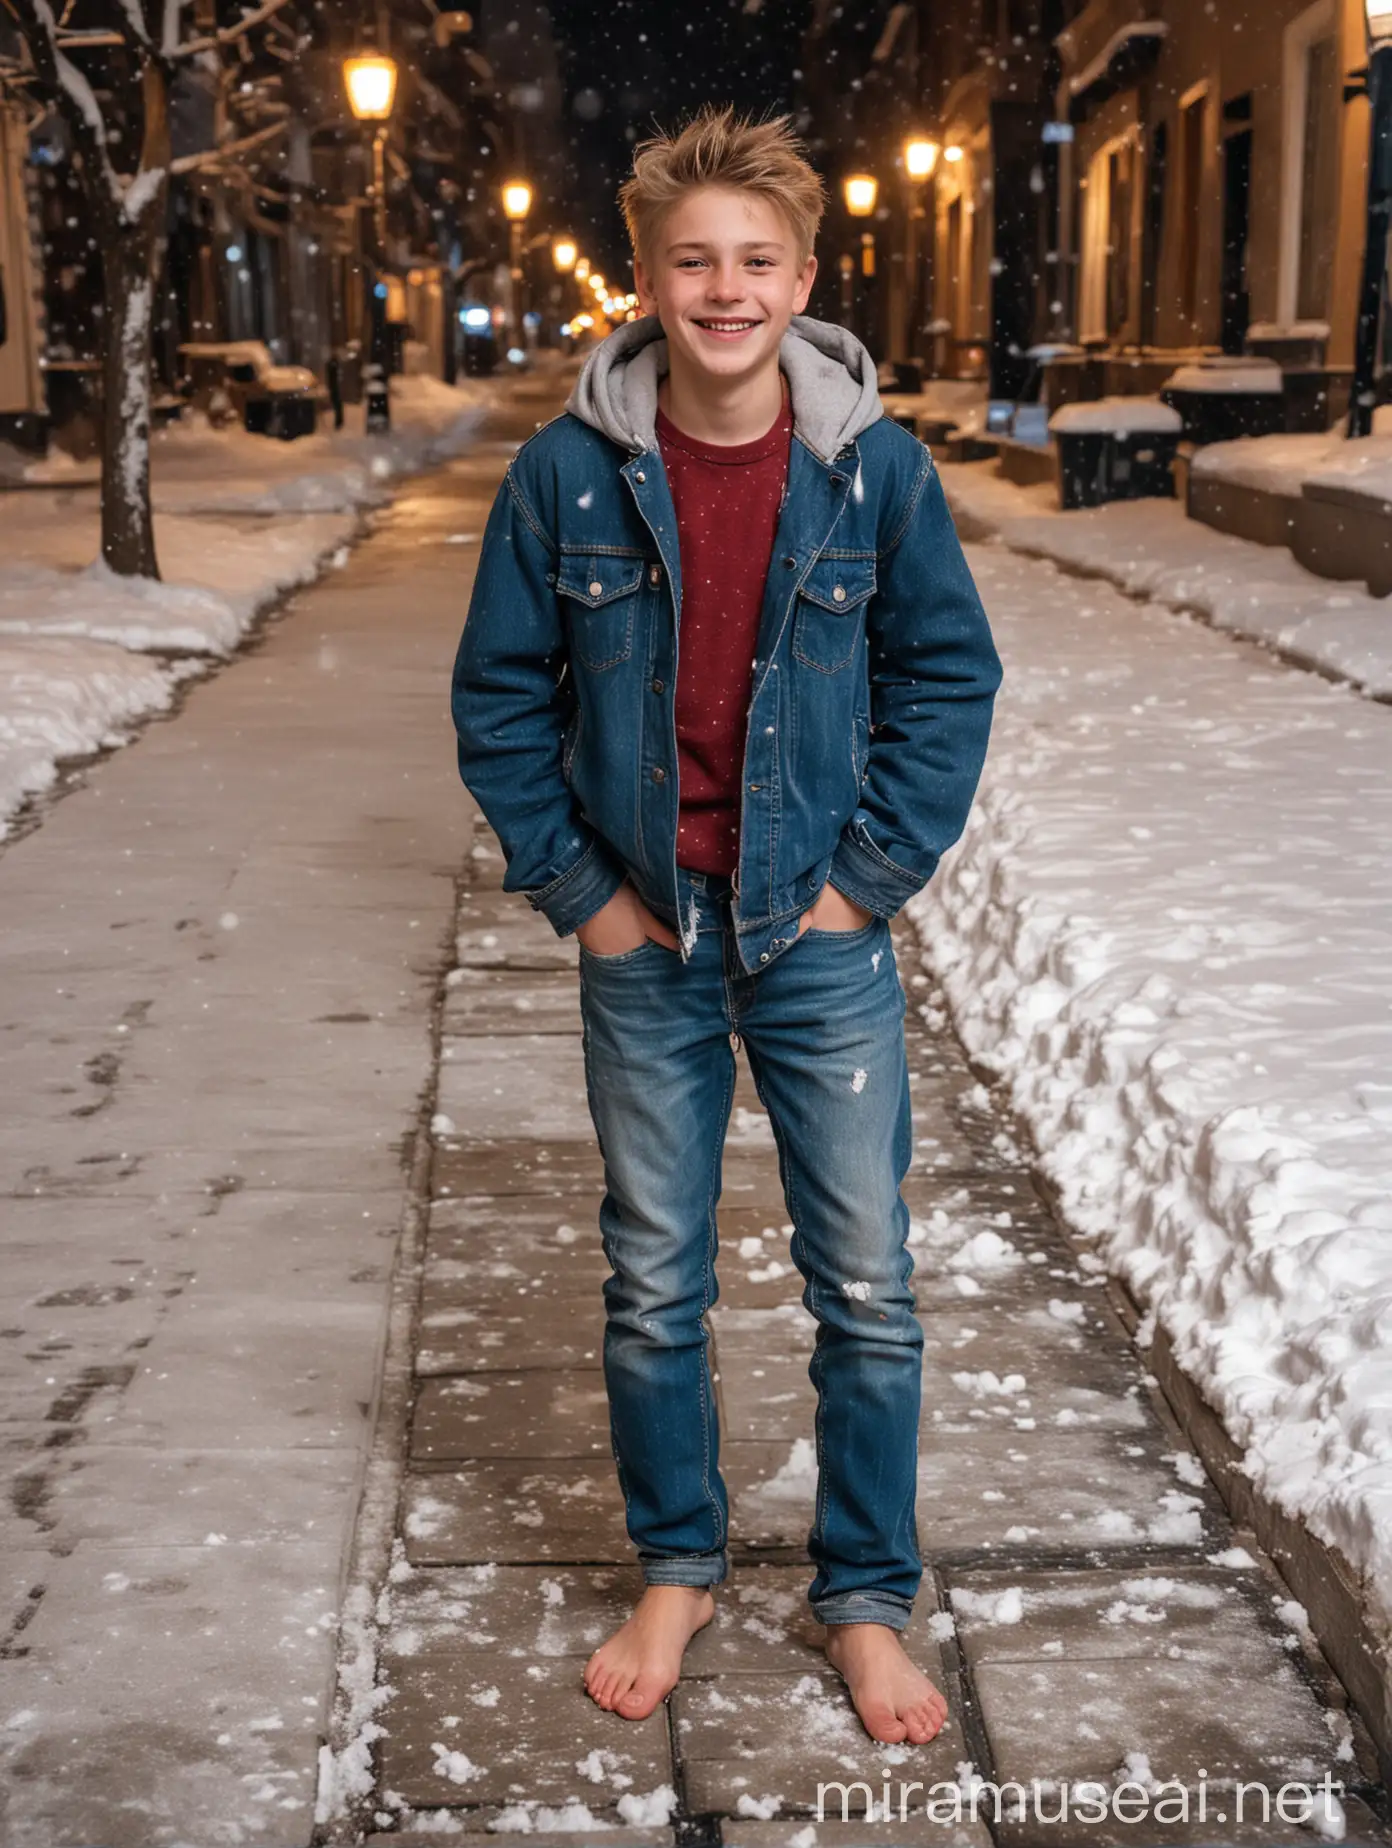 Teenage Boy Smiling Barefoot in Winter Snow